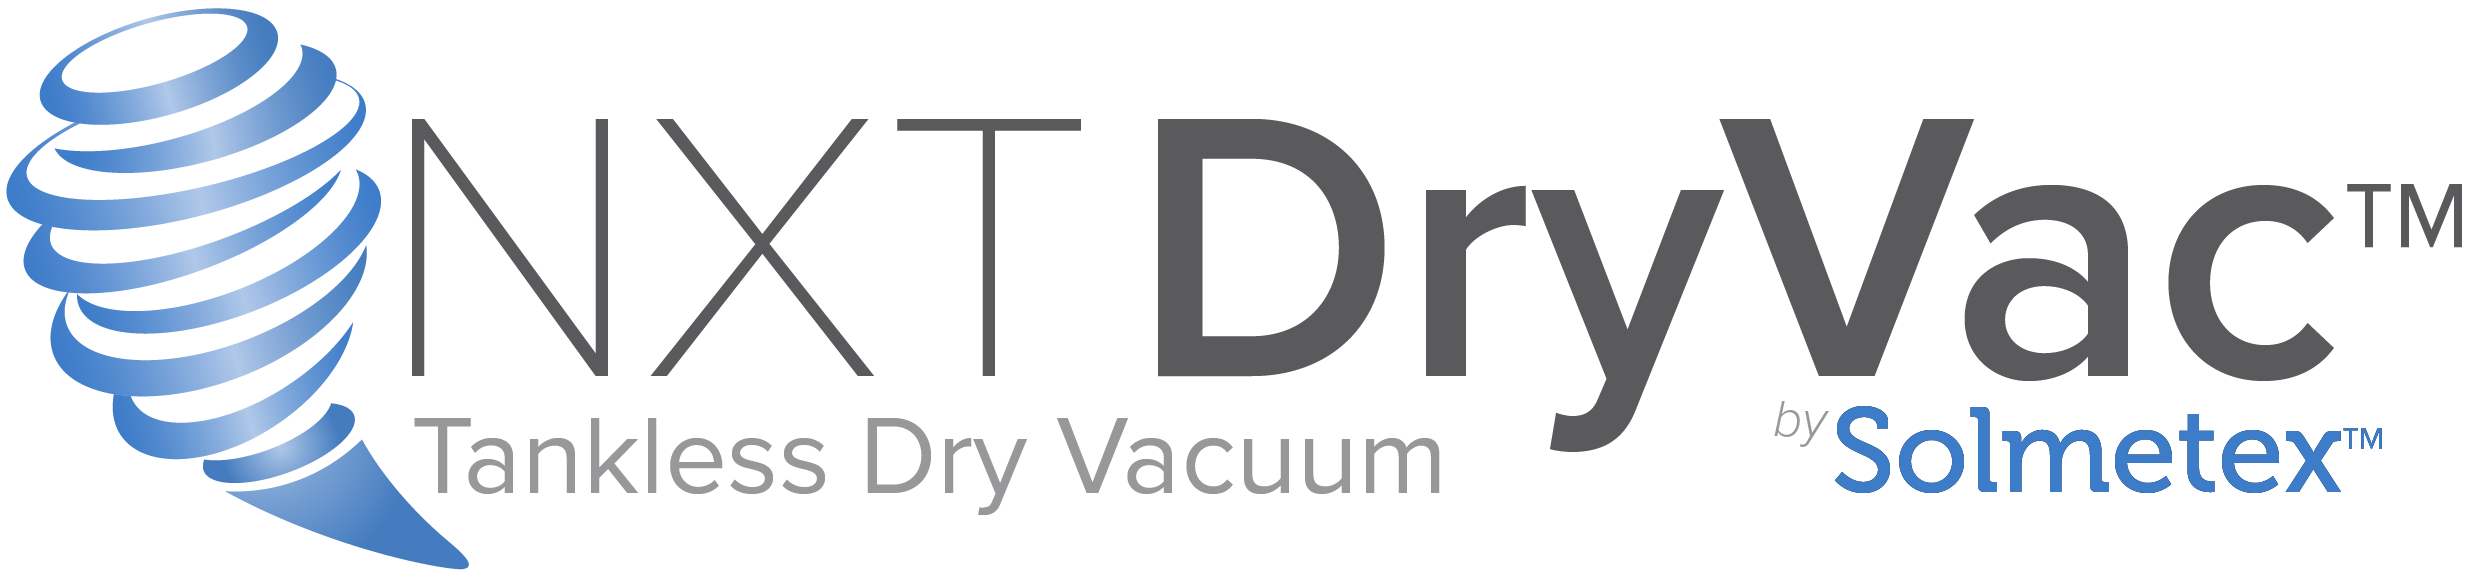 NXT DryVac logo